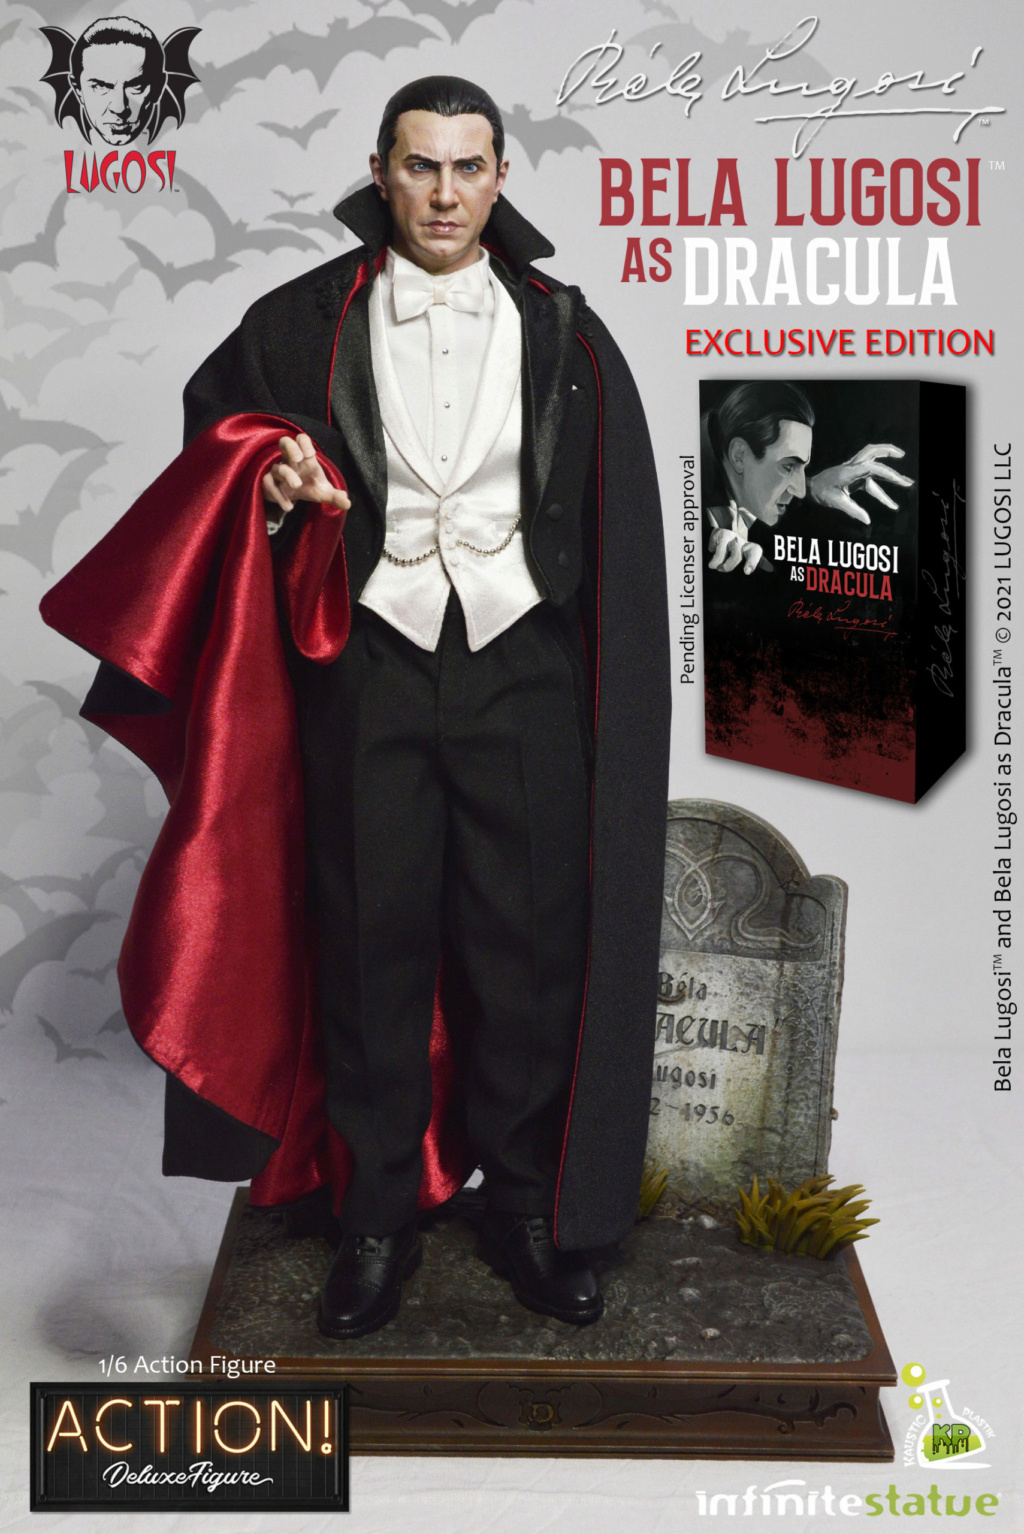 kausticplastik - NEW PRODUCT: Kaustic Plastik & Infinite Statue: Bela Lugosi as Dracula (standard, deluxe & exclusive) action figure 2894